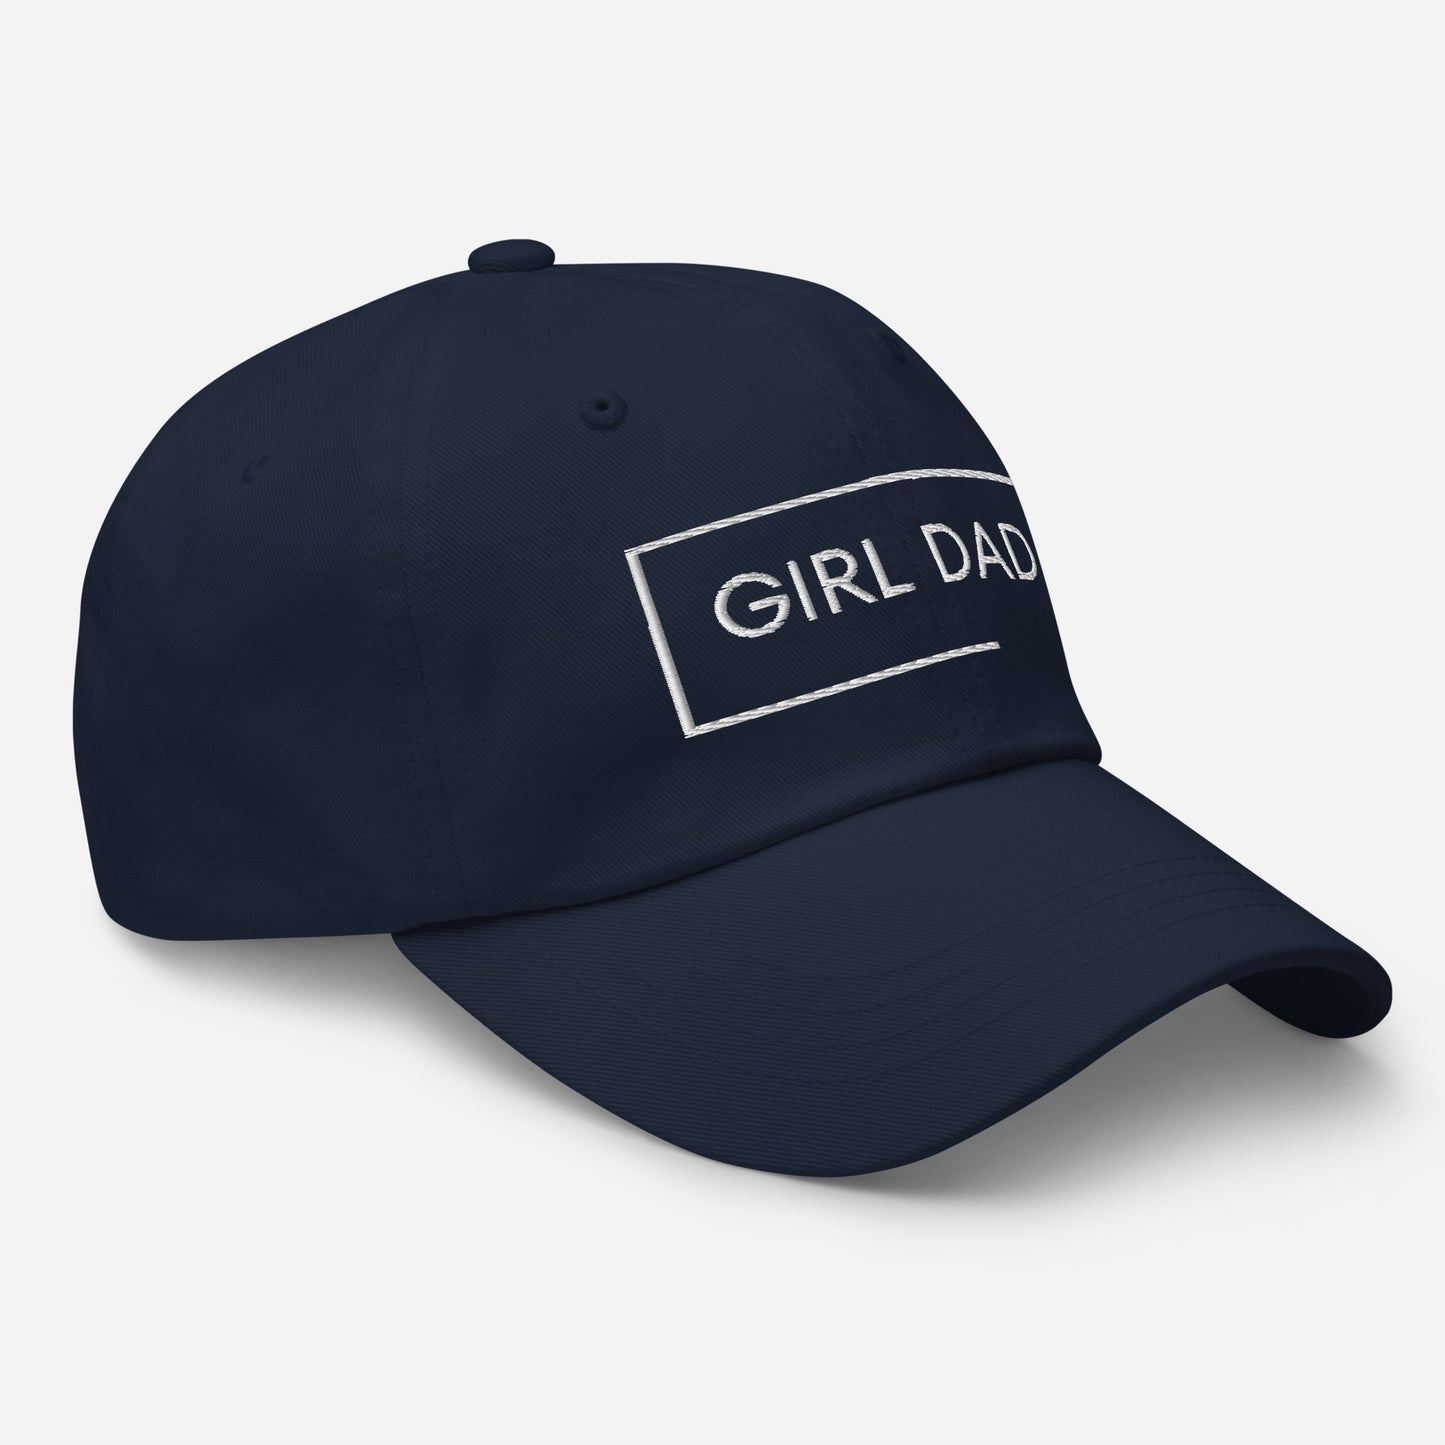 Girl Dad USA - Classic Dad Hat